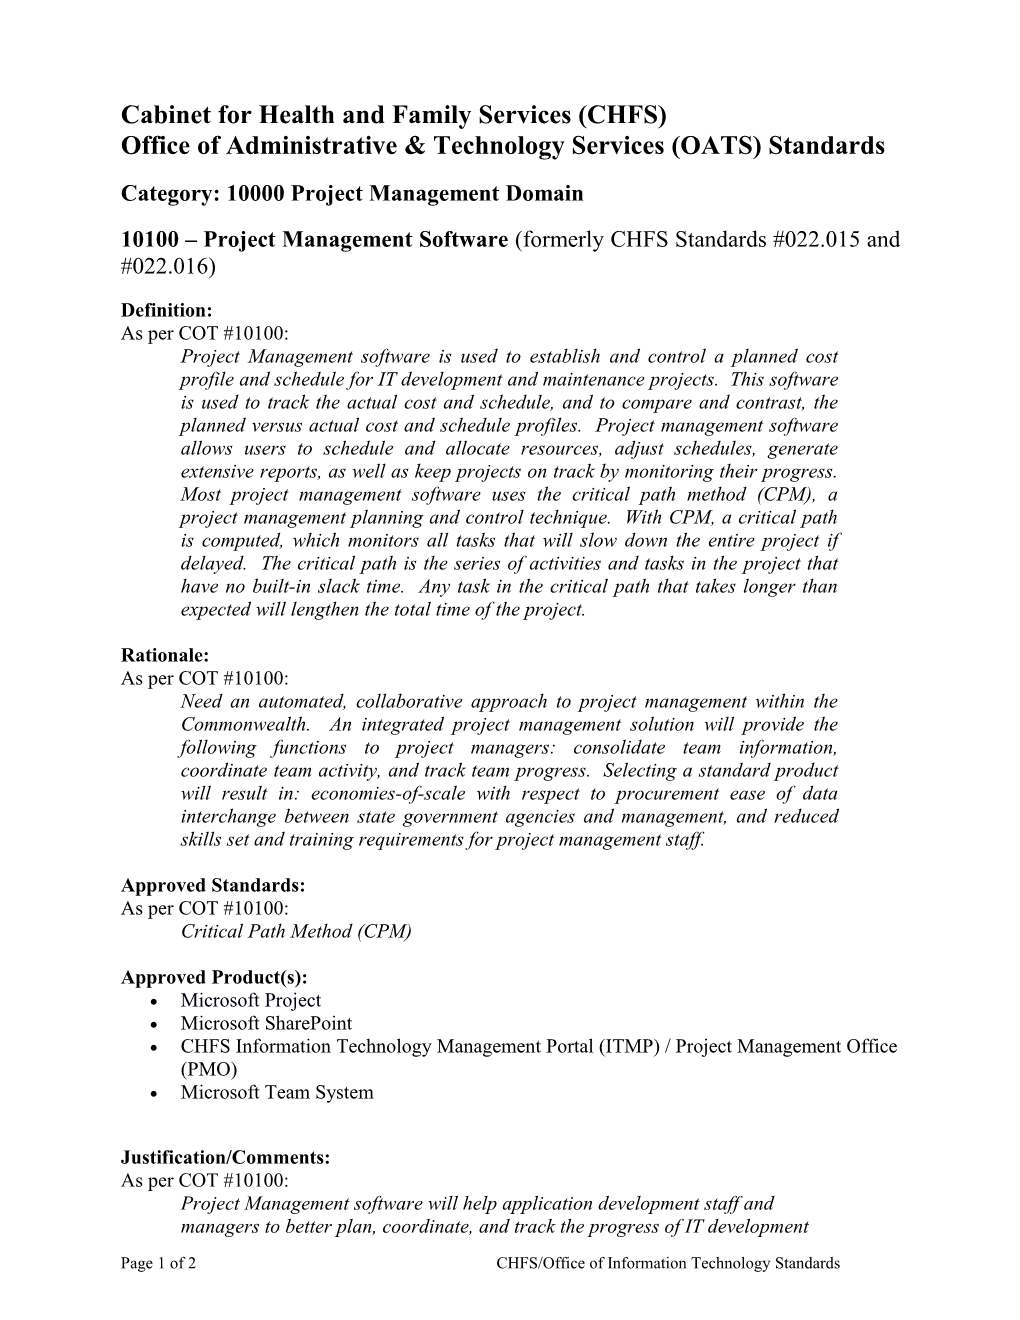 10100 - Project Management Software Standards